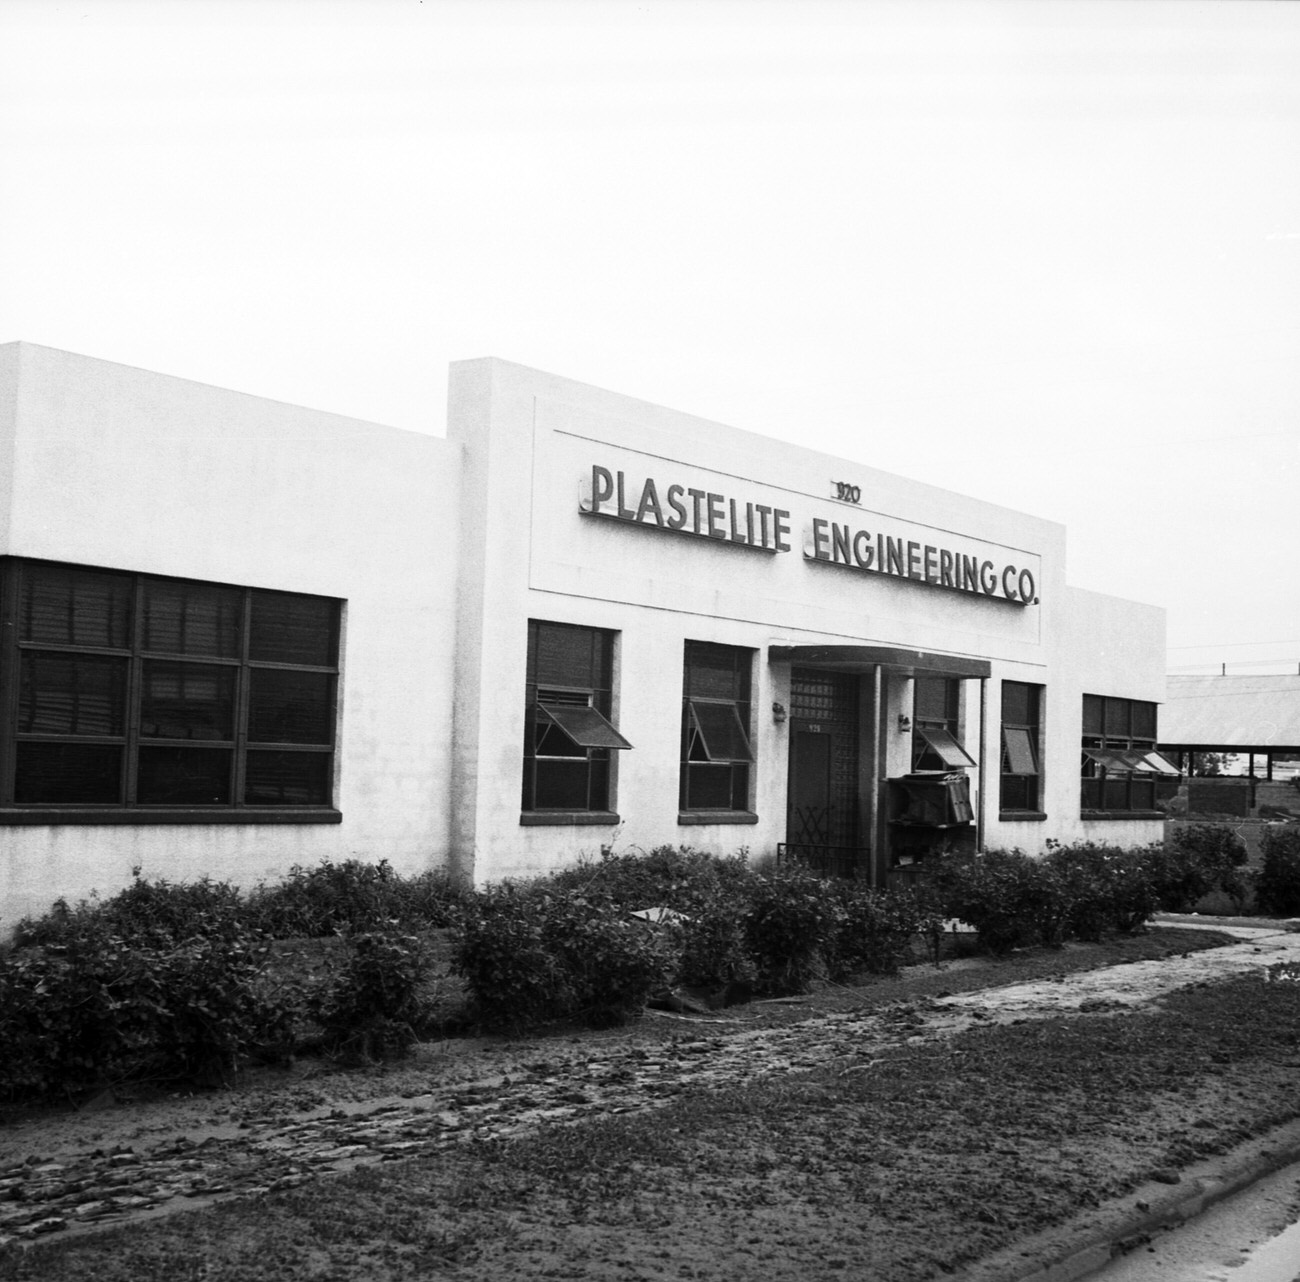 Plastelite Engineering Company building after flood, 1949